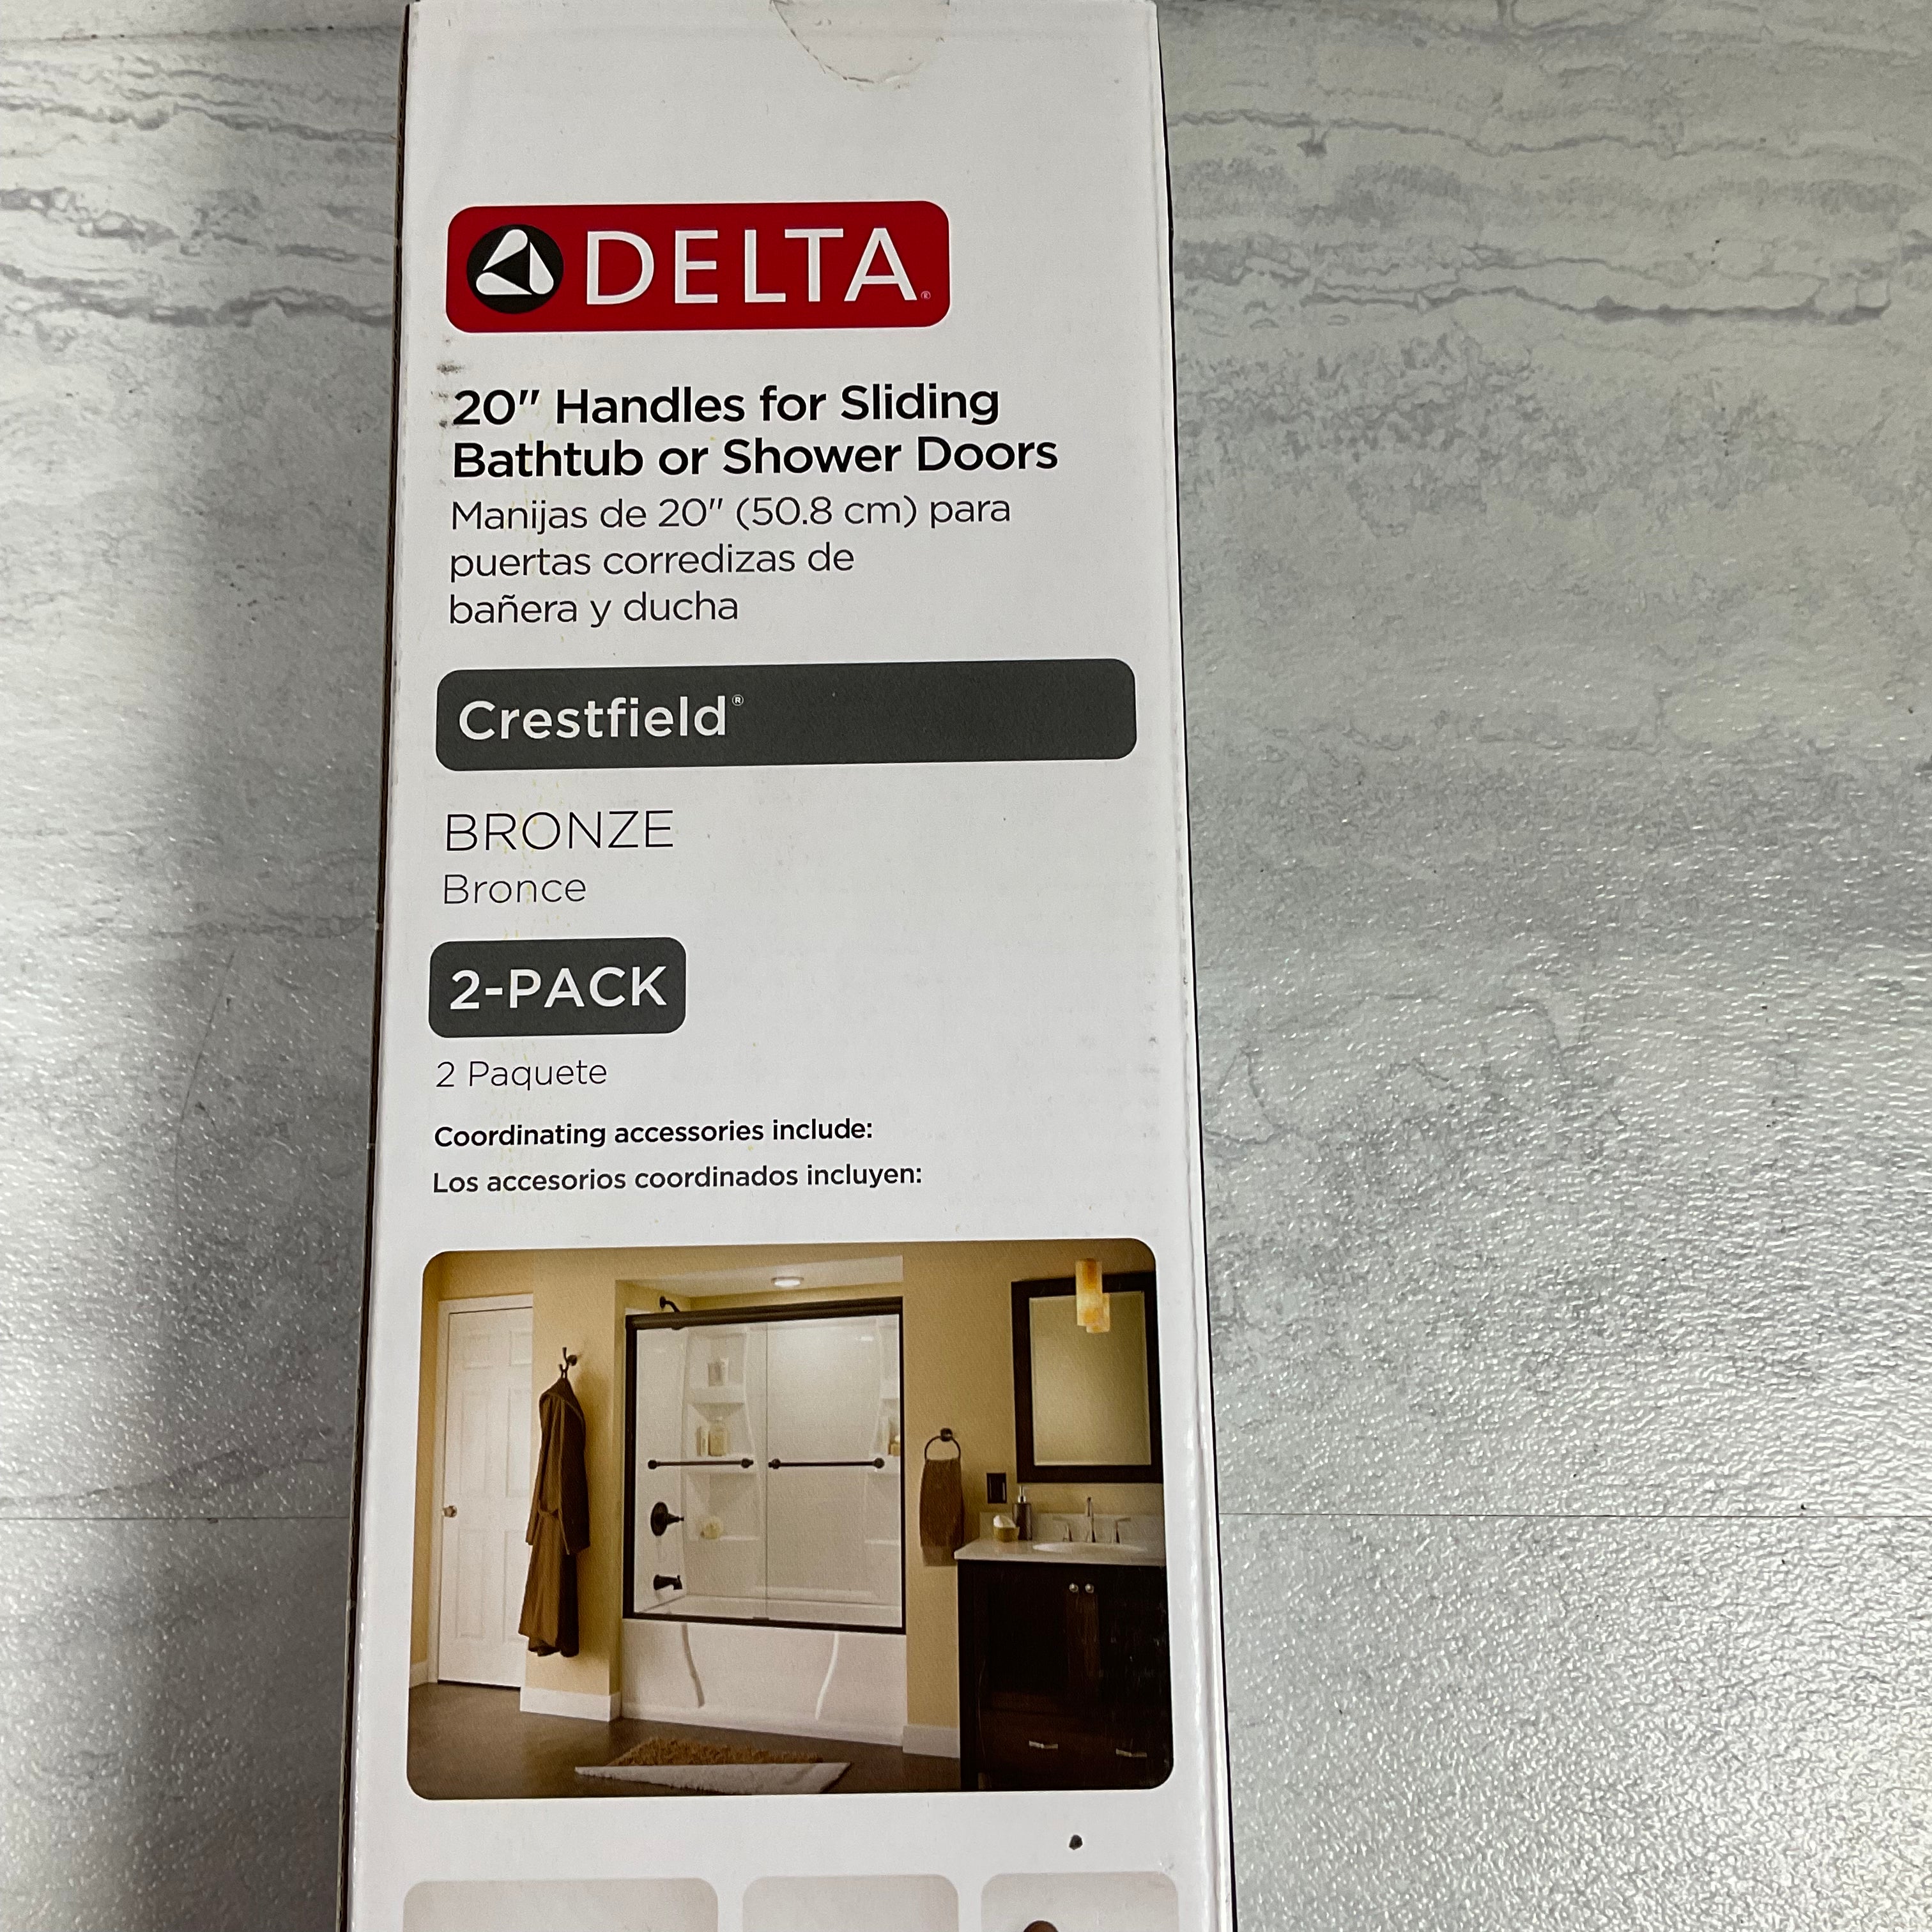 Delta SDBR003-OB-R 20 in. Crestfield Handle Sliding Shower Tub Door Bronze (7345173561582)